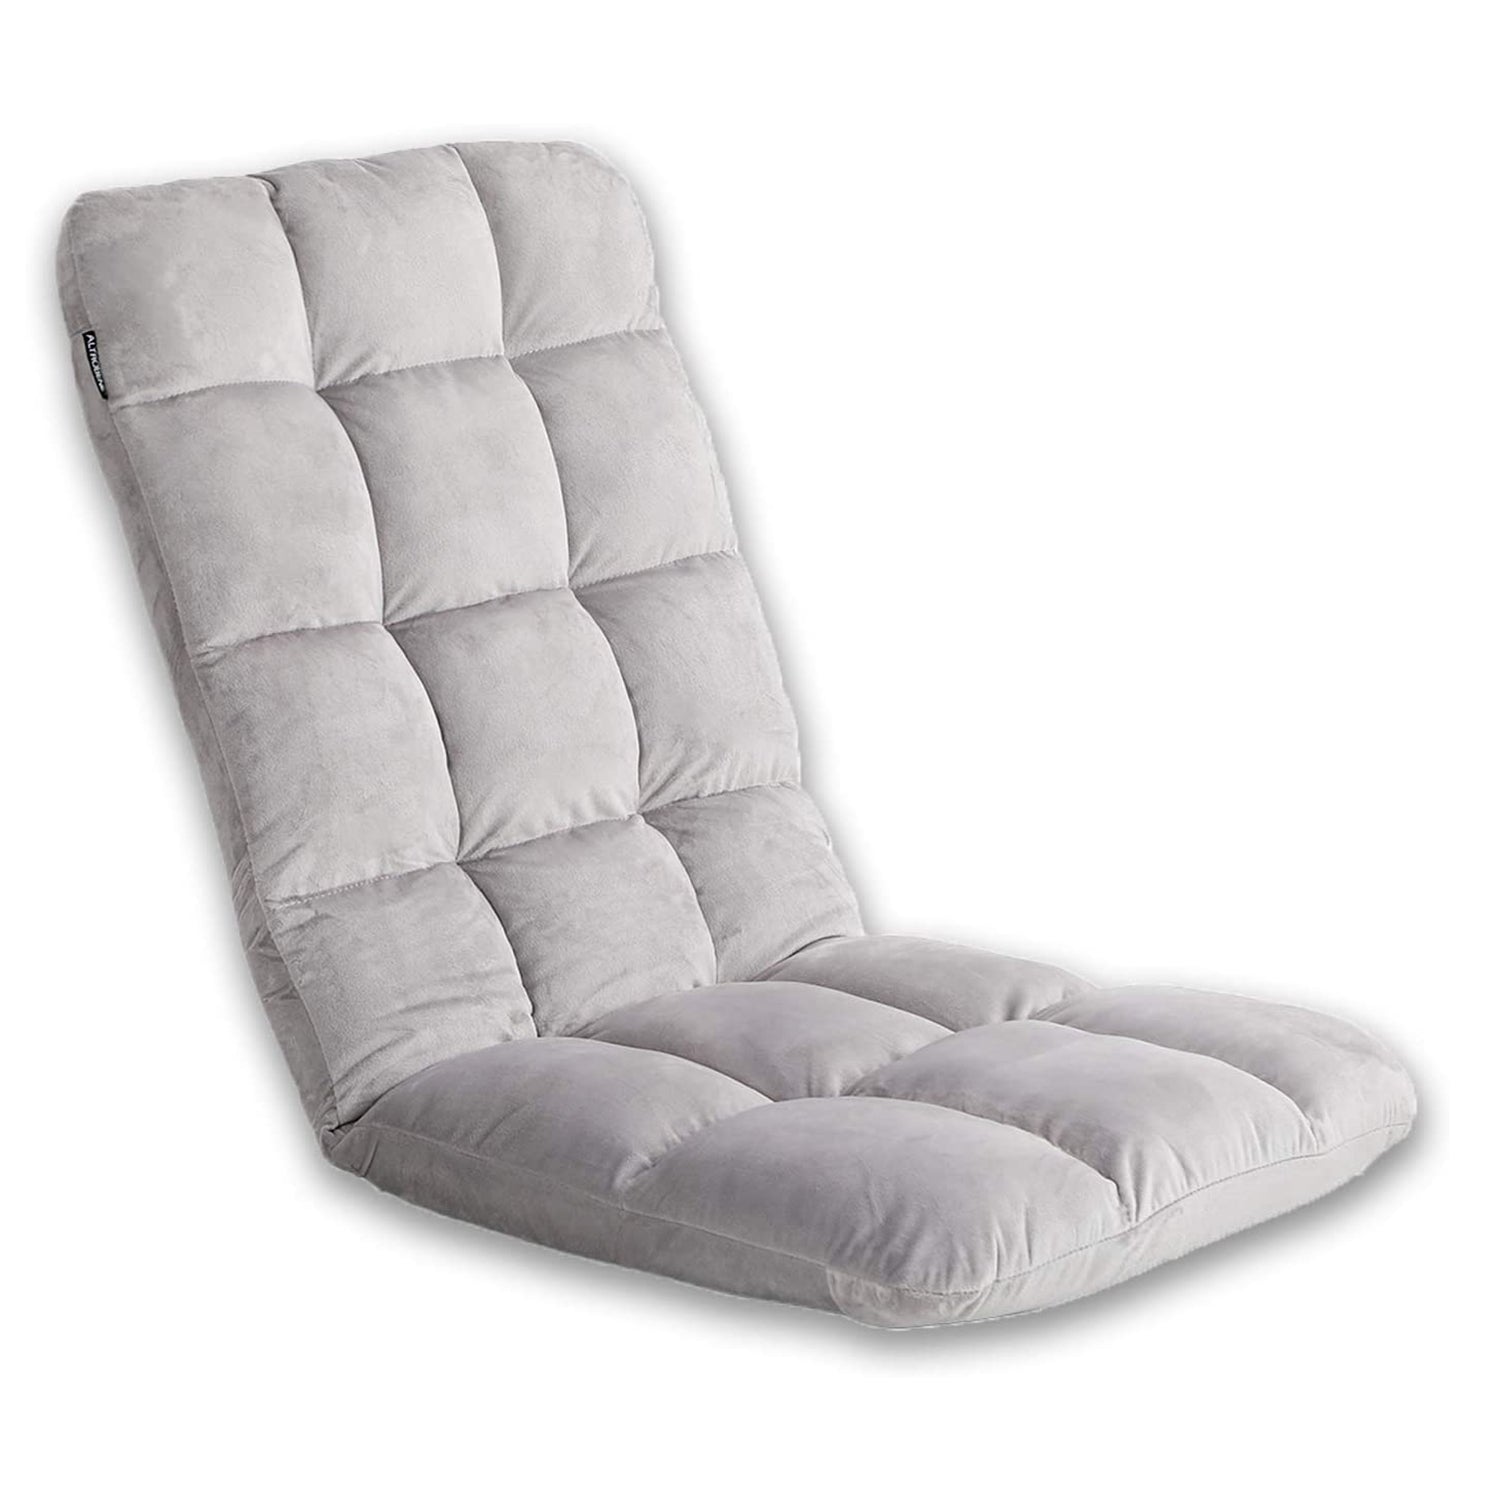 PHI VILLA Adjustable Lazy Floor Sofa Chair Recliner